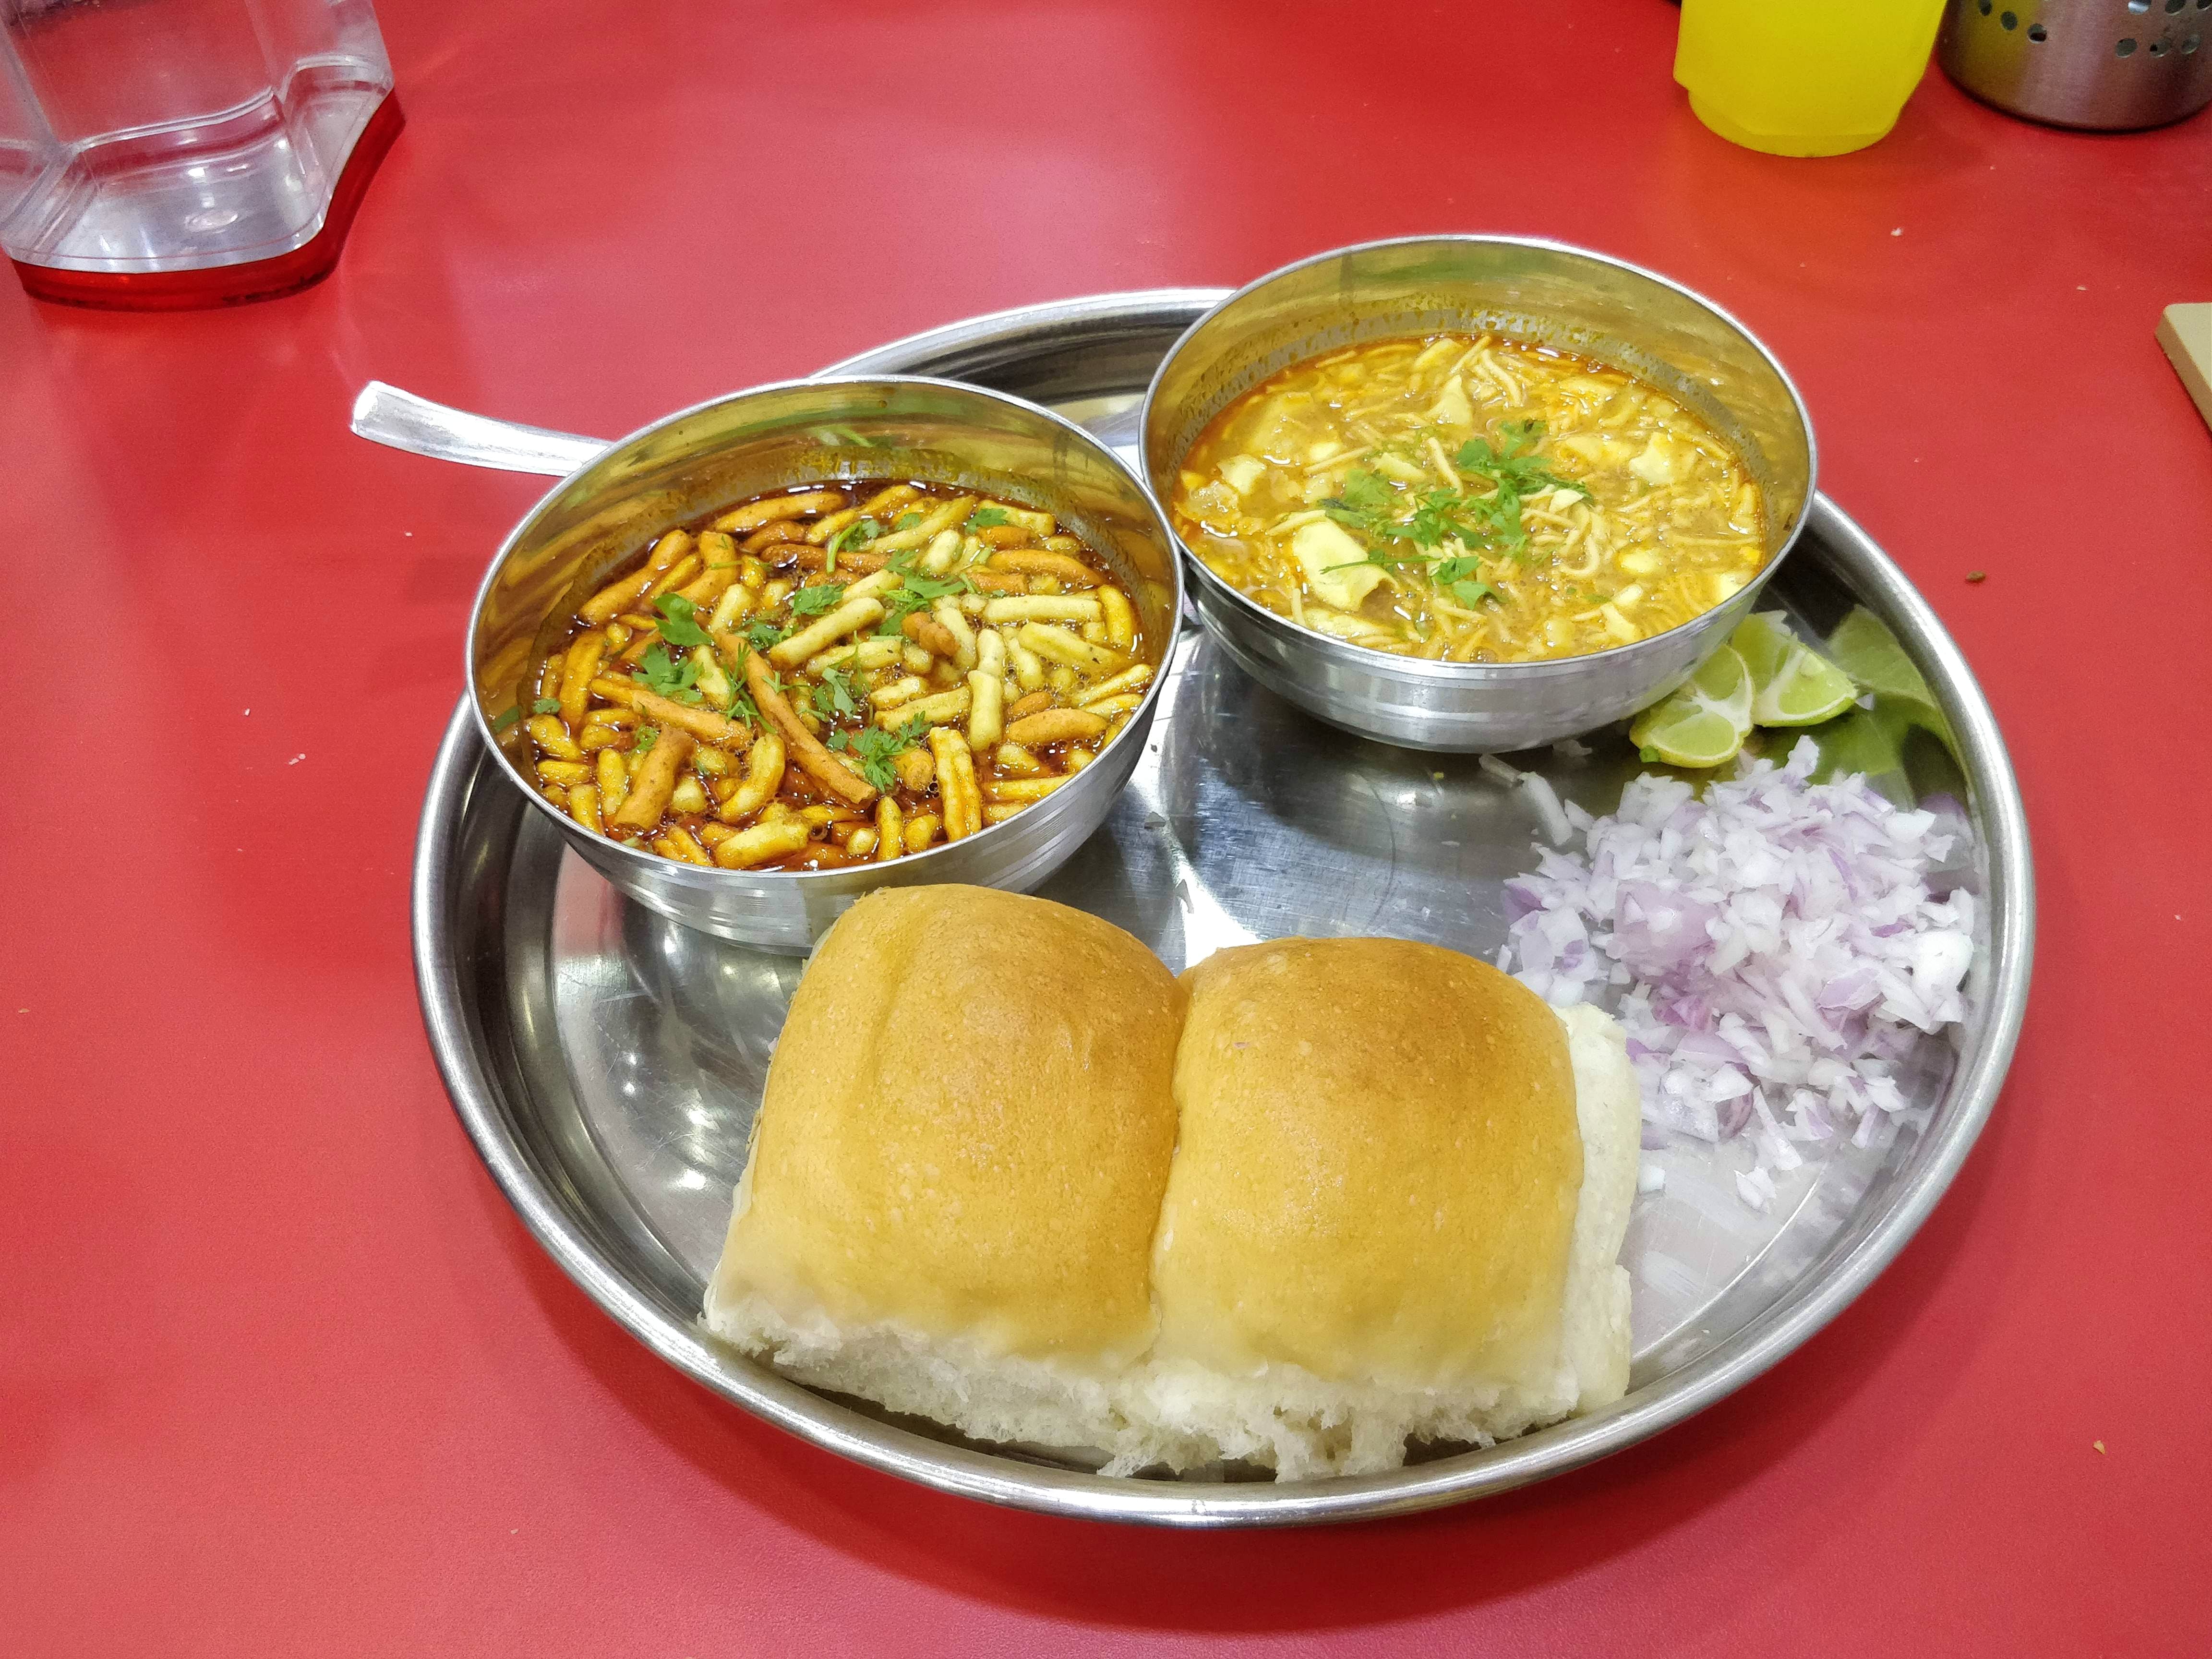 Dish,Food,Cuisine,Ingredient,Meal,Lunch,Produce,Indian cuisine,Maharashtrian cuisine,Breakfast